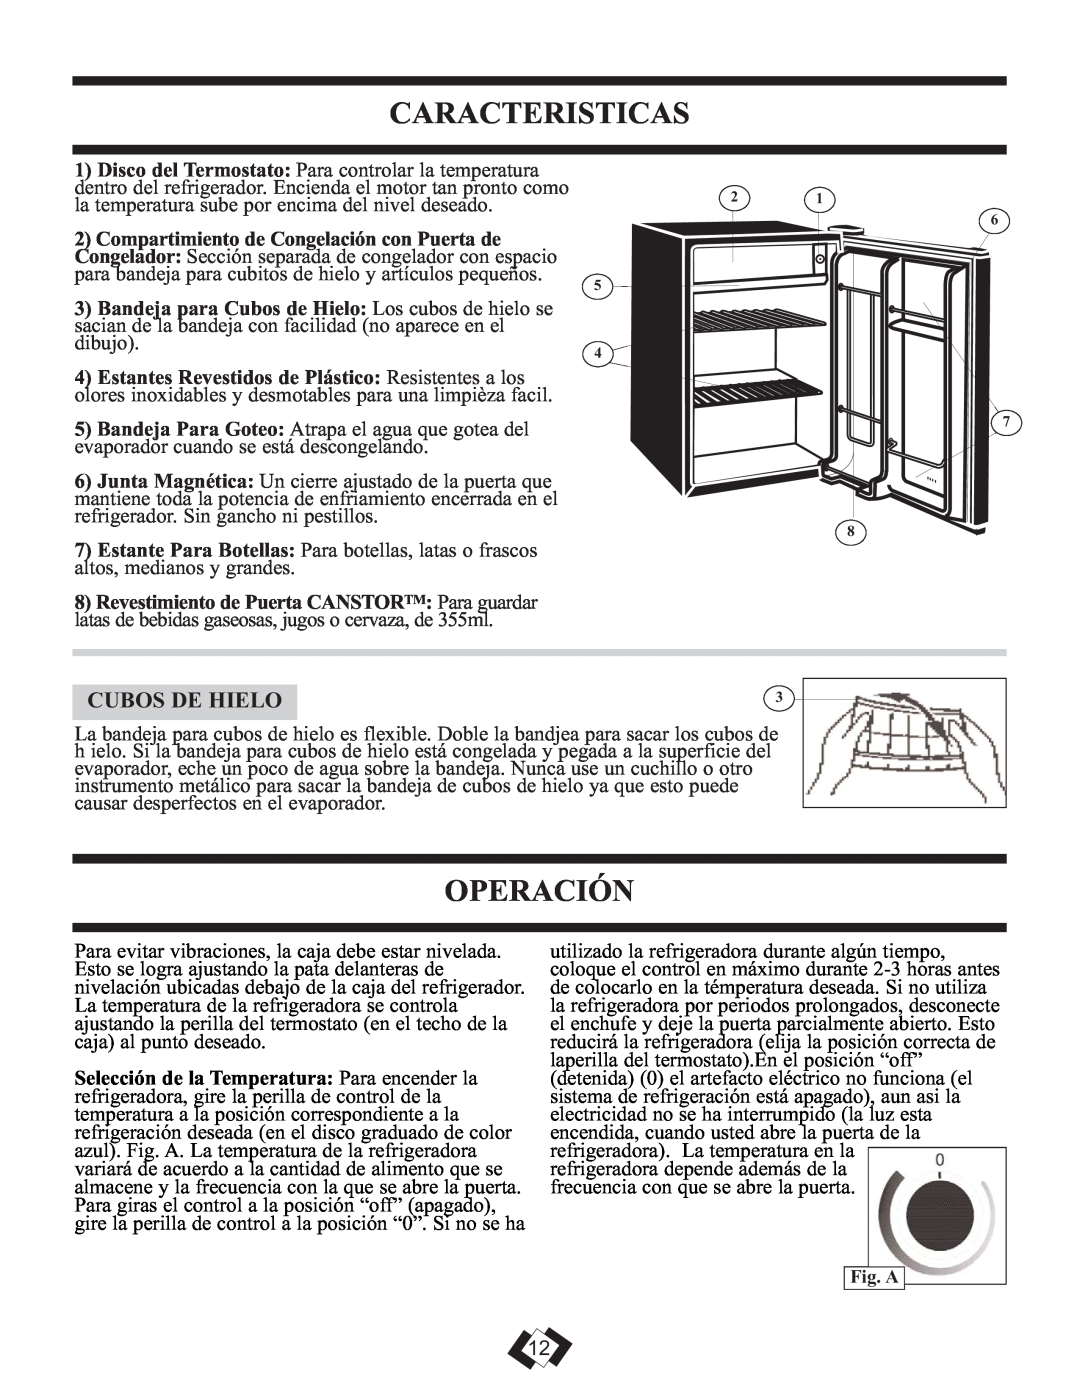 Danby DCRM71BLDB installation instructions Caracteristicas, Operación, Cubos De Hielo 